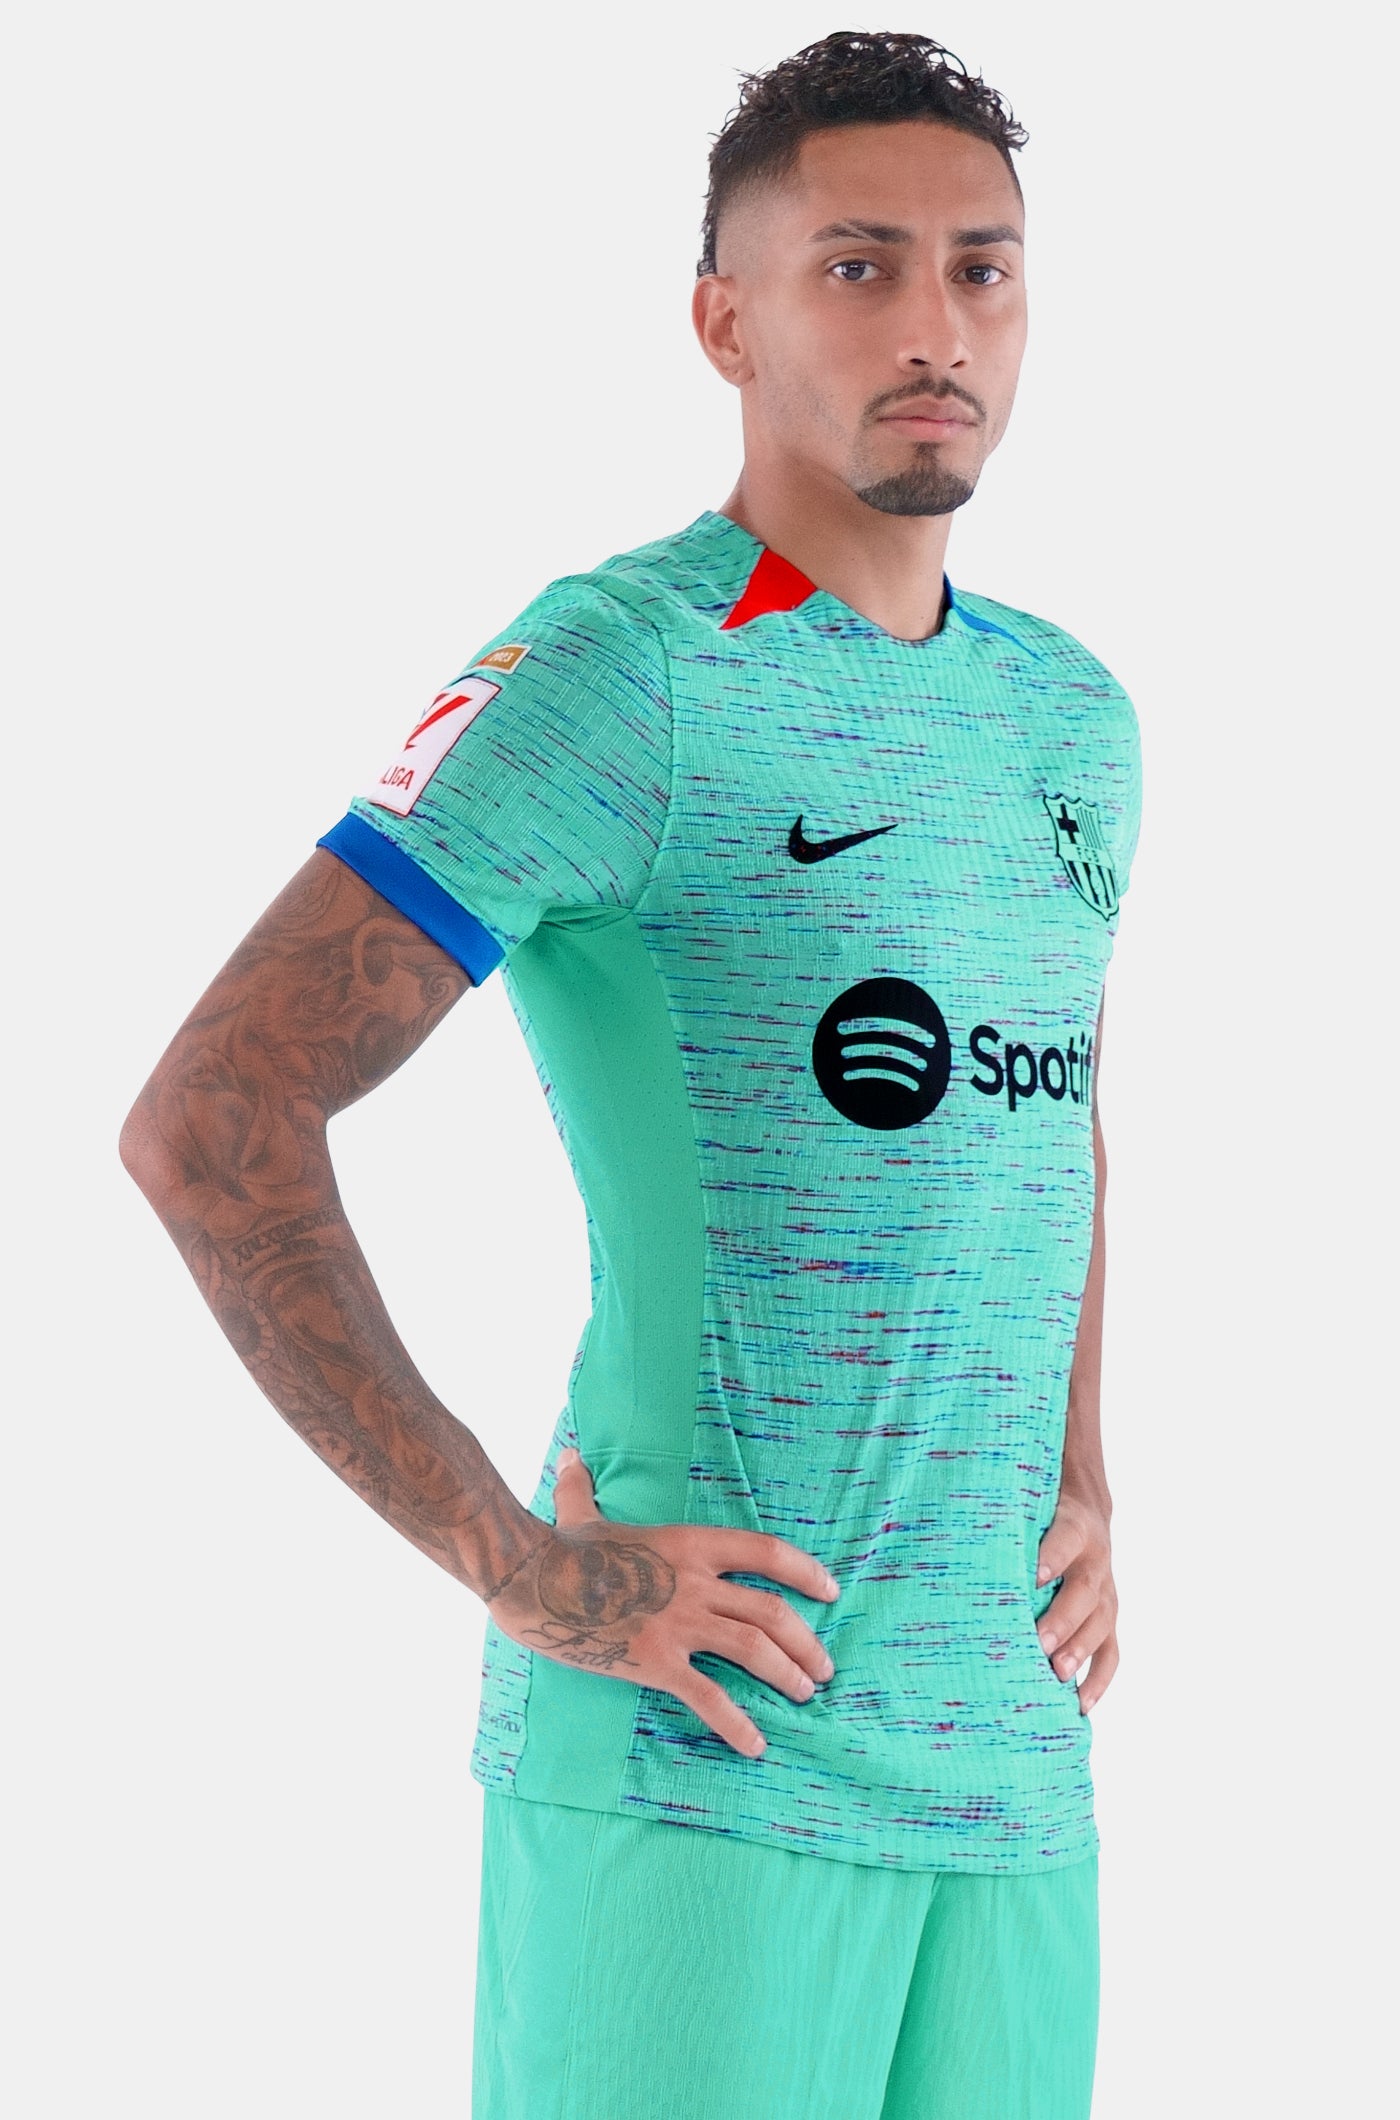 LFP FC Barcelona third shirt 23/24 Player’s Edition  - RAPHINHA